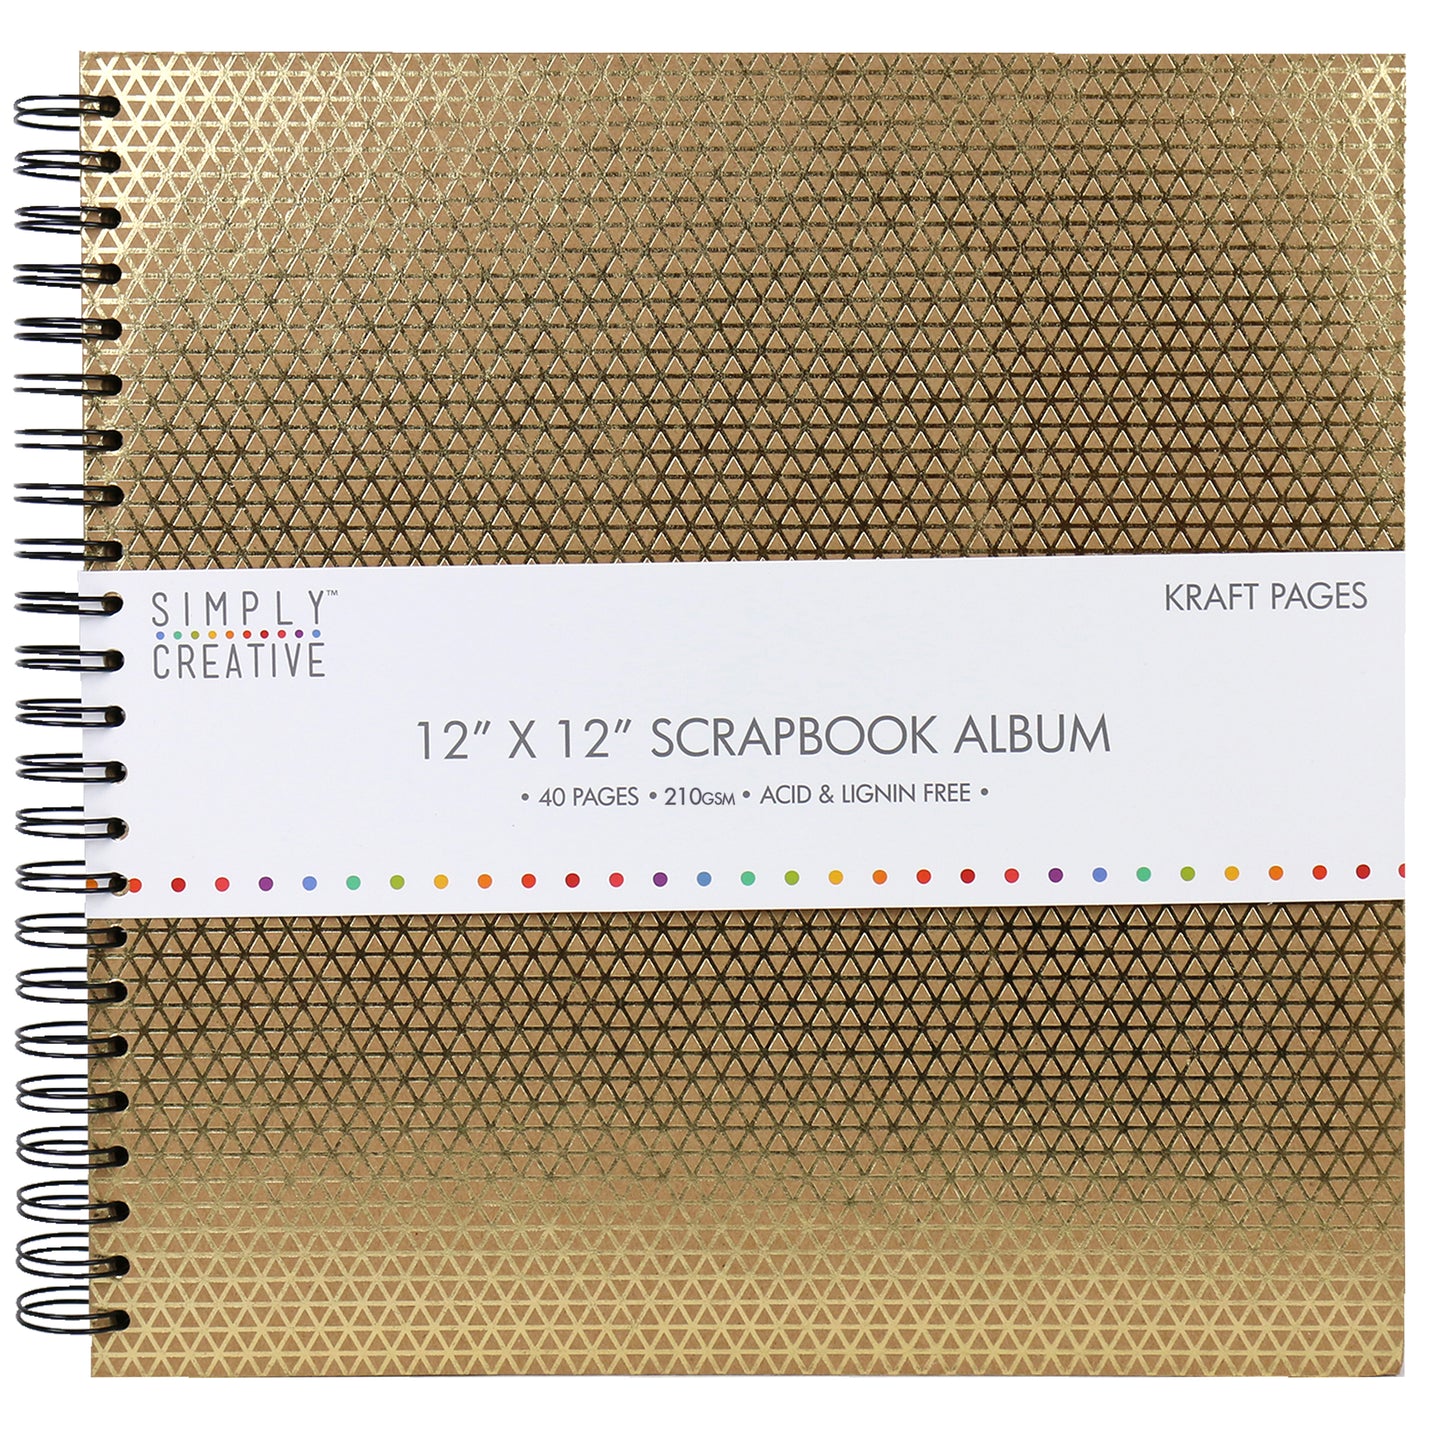 Simply Creative Album 12x12 - Kraft With Gold Geometric